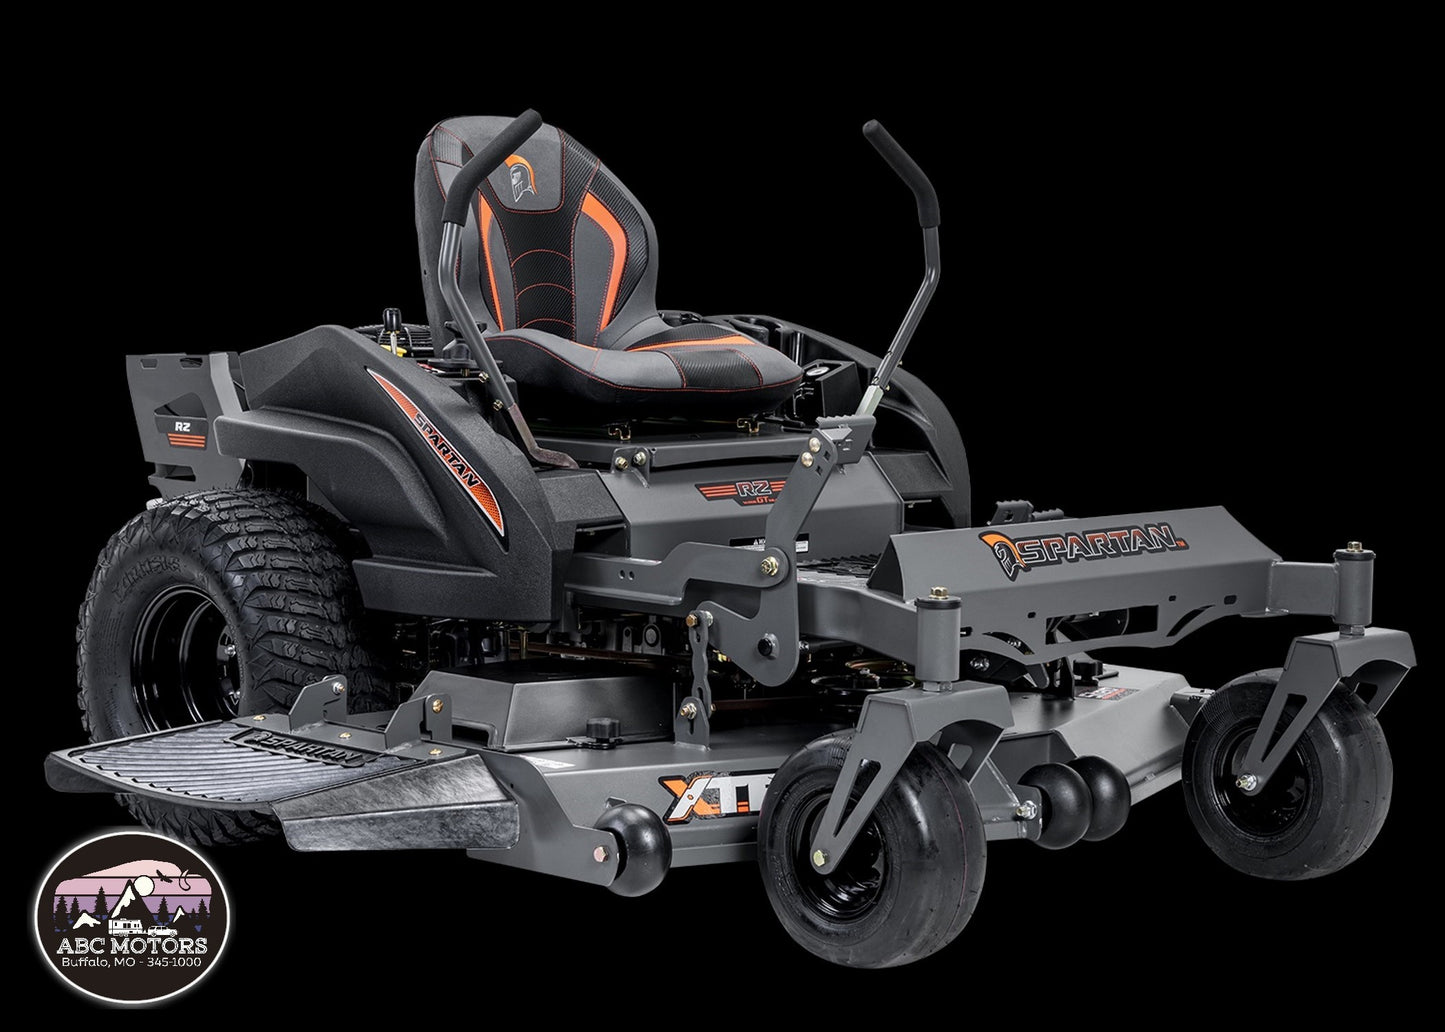 2023 Spartan RZ - Zero-Turn Riding Lawn Mower- 61in Deck - Kawasaki FR730 24HP